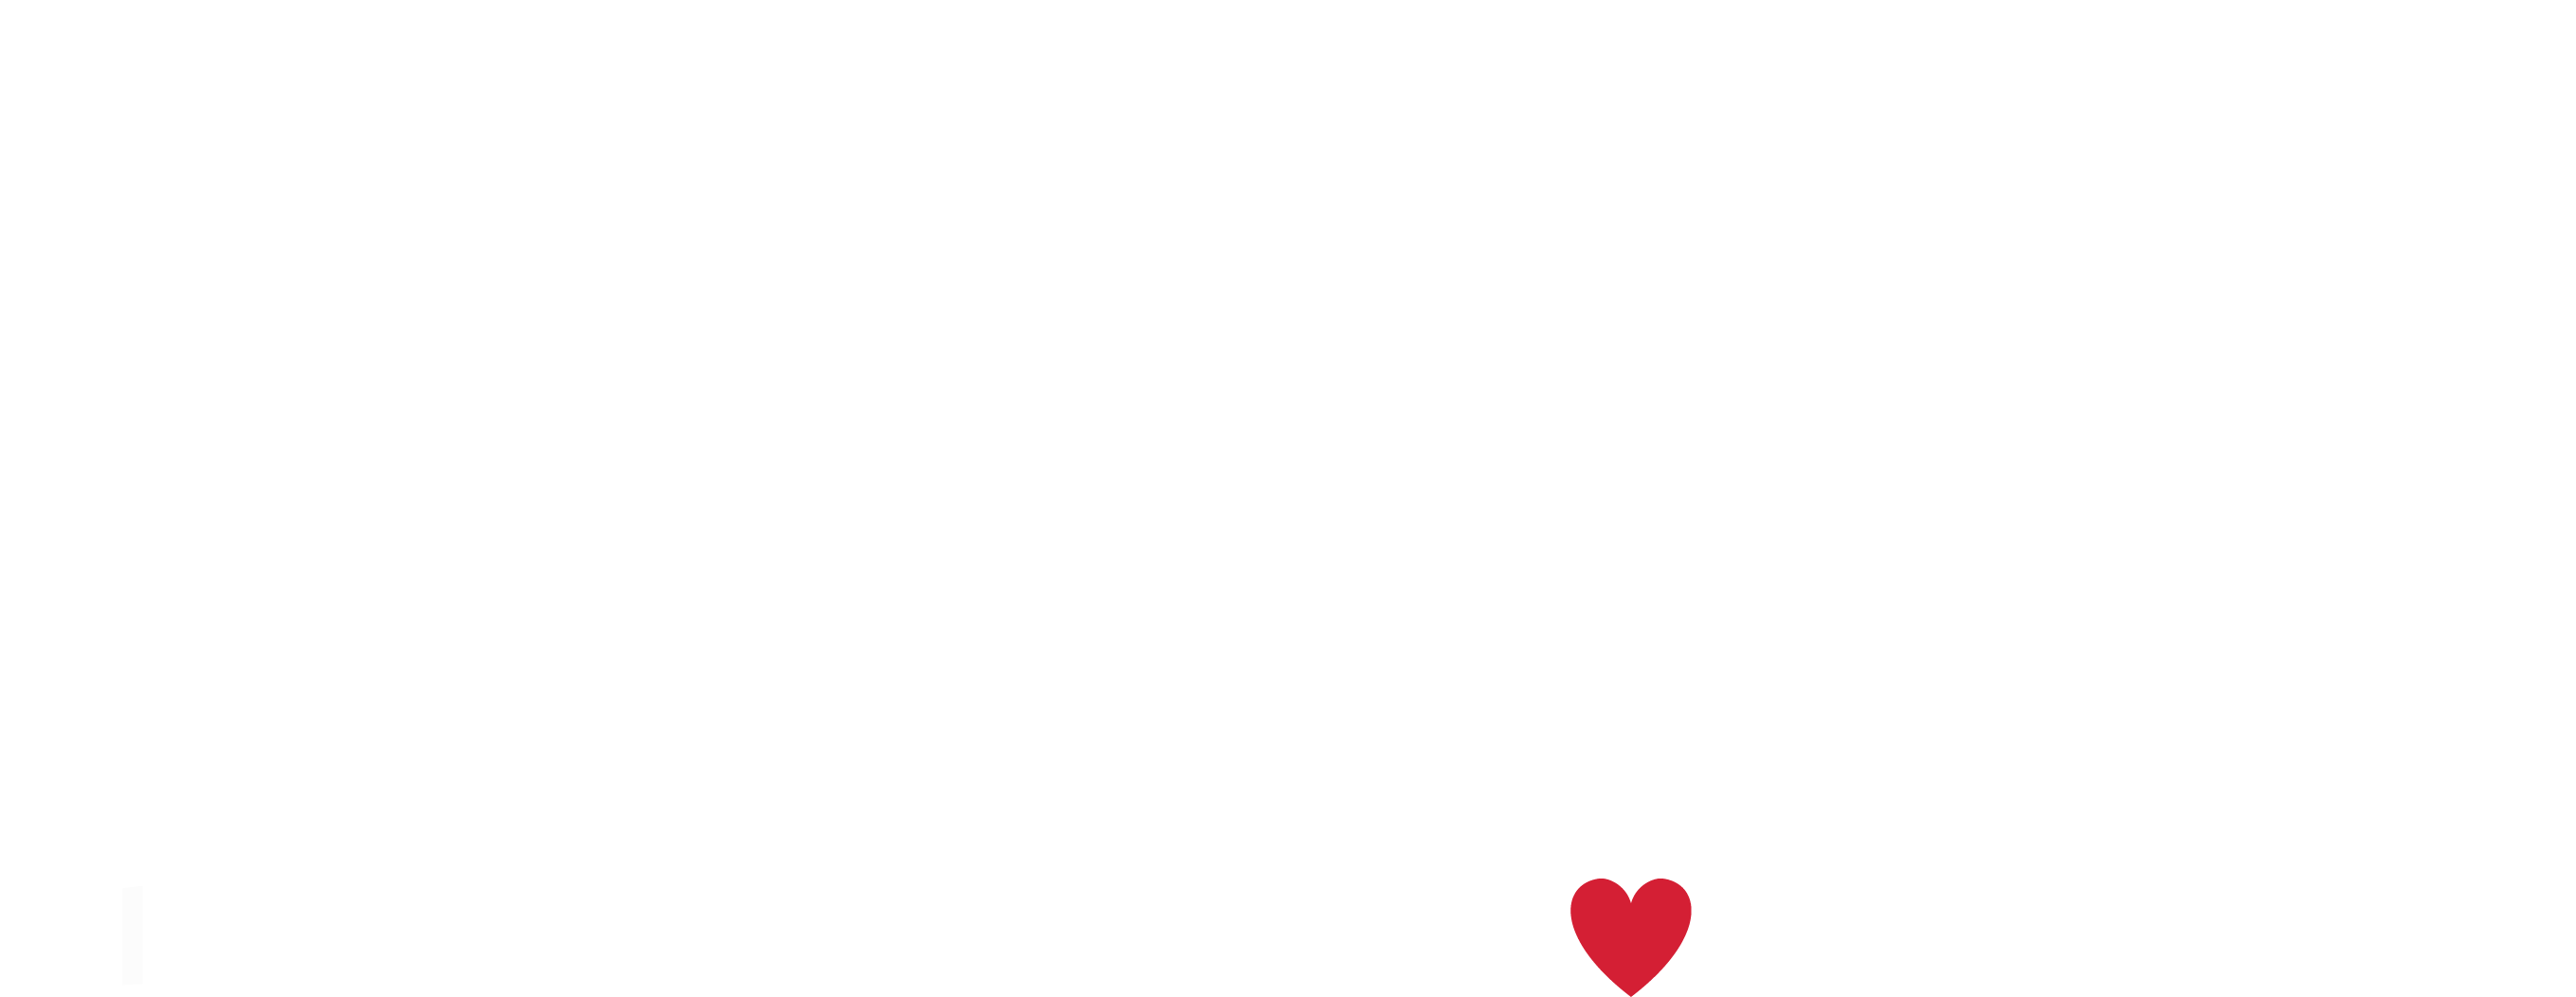 Virtual Virginia